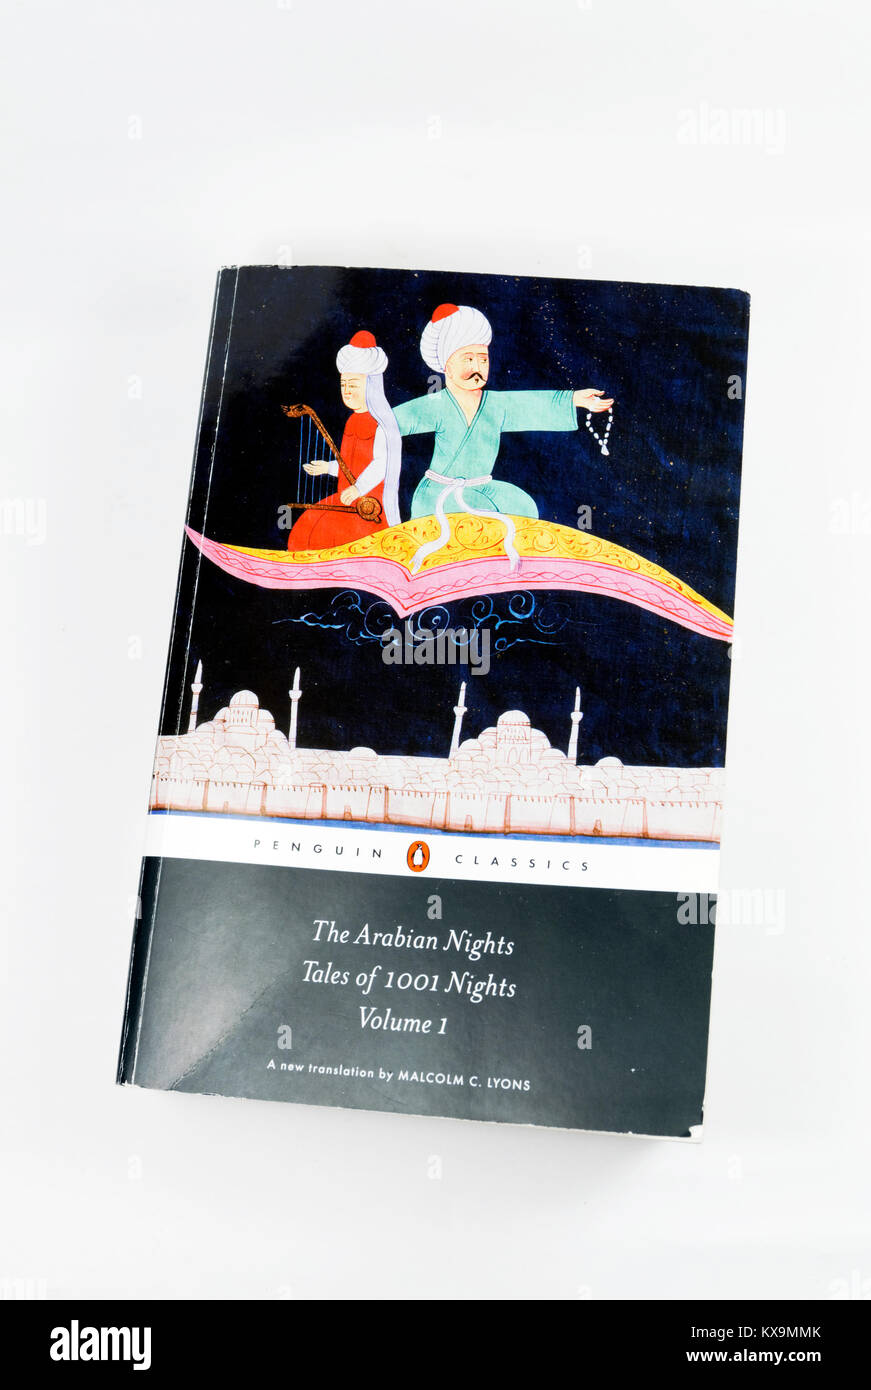 L'Arabian Nights, racconti di 1001 notti, volume 1, Penguin Classics prenota. Foto Stock